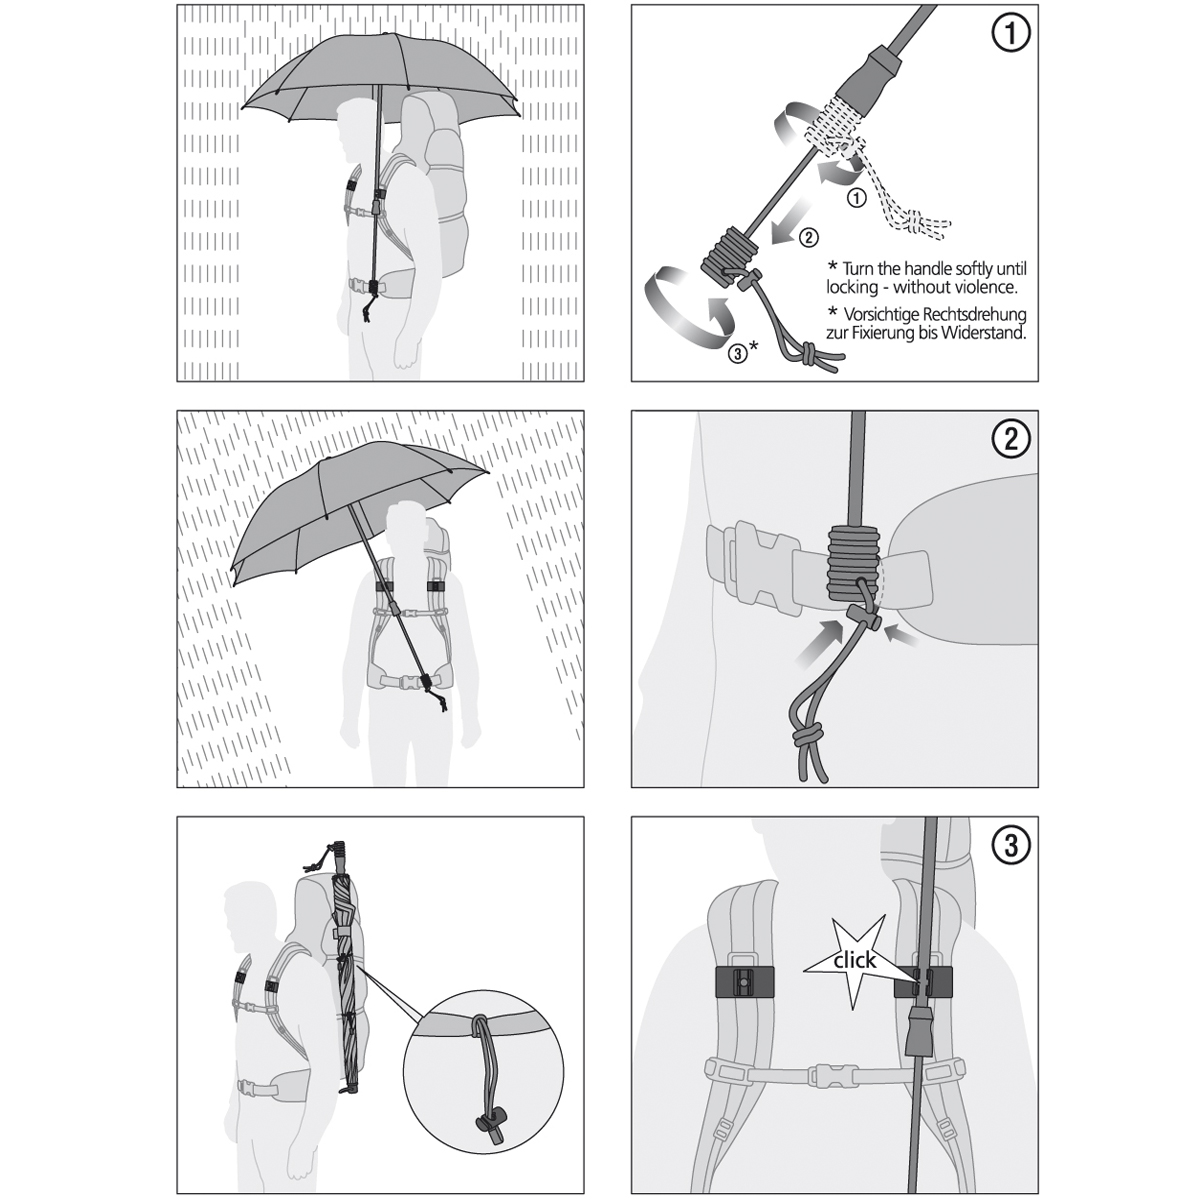 Euroschirm Swing handsfree - Der erste echte handfreie Trekking-Stockschirm  - Regenschirm - Gelb | Regenschutz | Zubehör | Rucksäcke | Outdoor